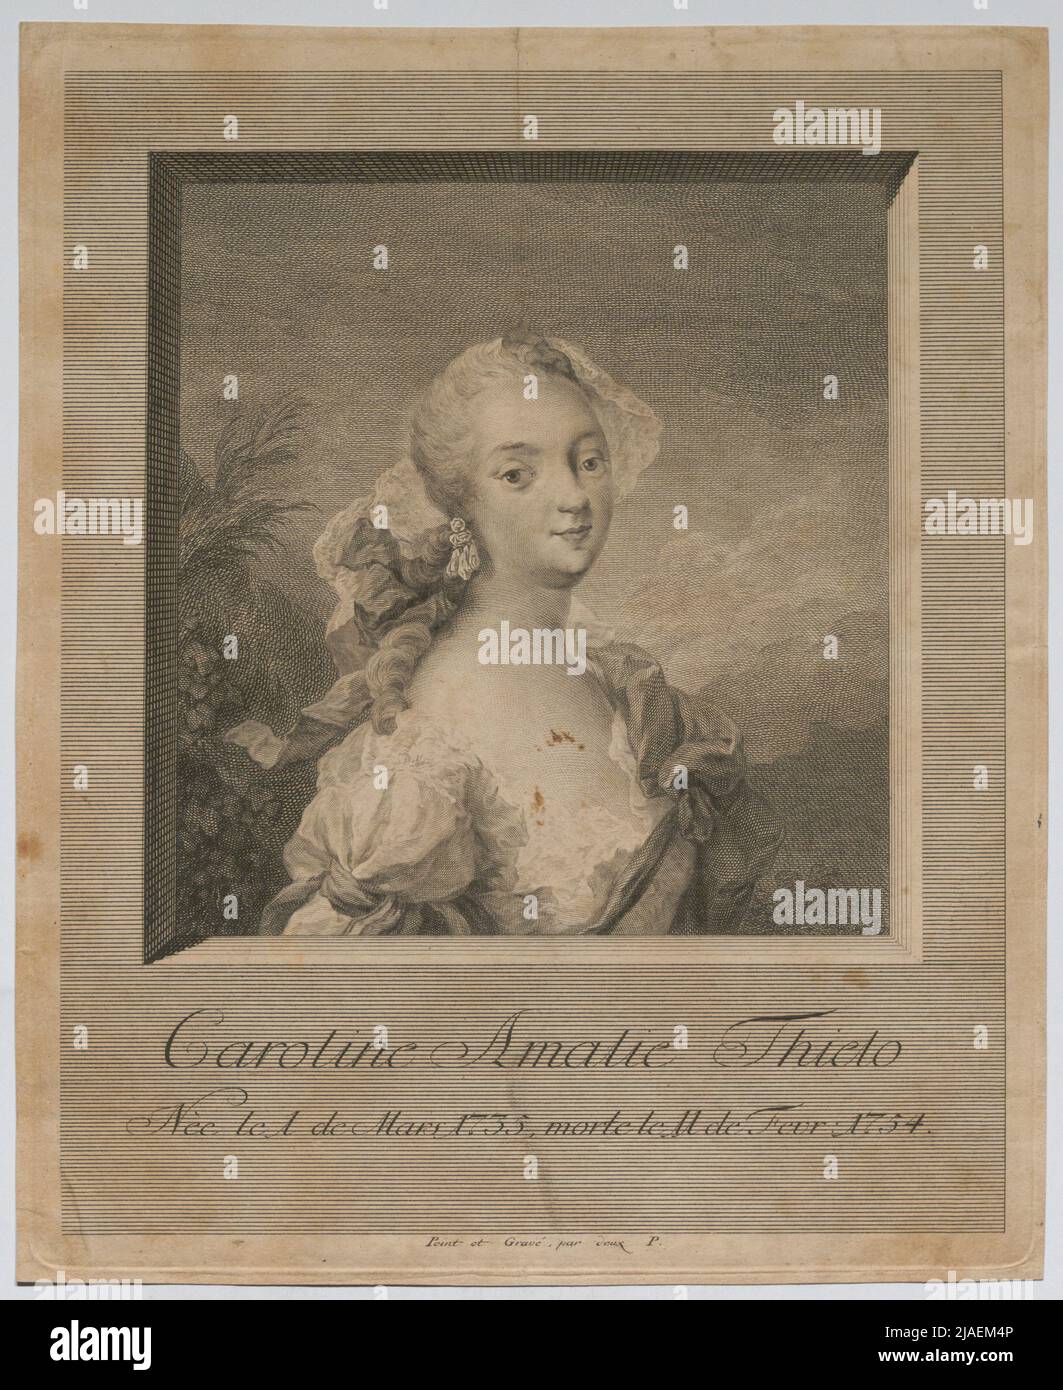 Caroline Amalie Thielo Nèe le 1 de Mars 1735, morte le 11 de FevR: 1754. '. Caroline Amalie Thielo, attrice danese. Johann Martin Preissler (1715-1794), incisore in rame Foto Stock